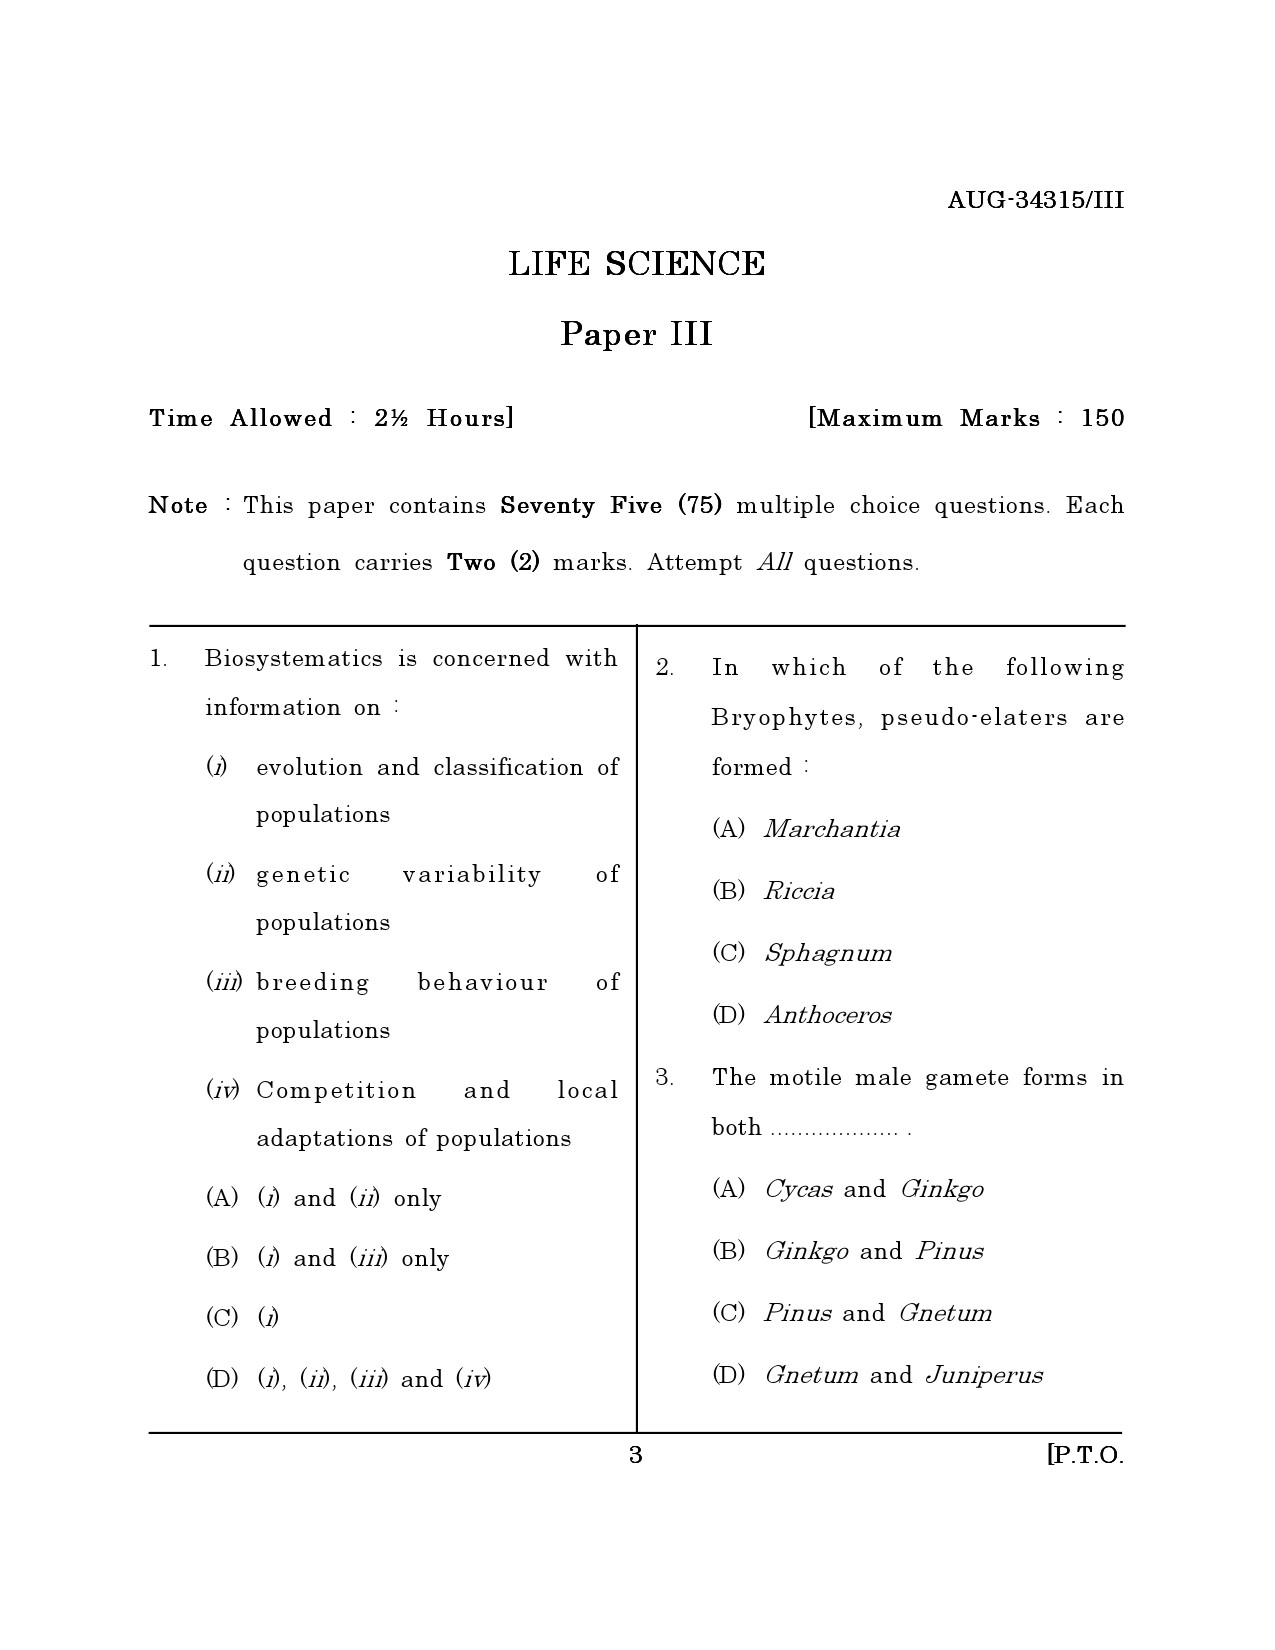 Maharashtra SET Life Sciences Question Paper III August 2015 2